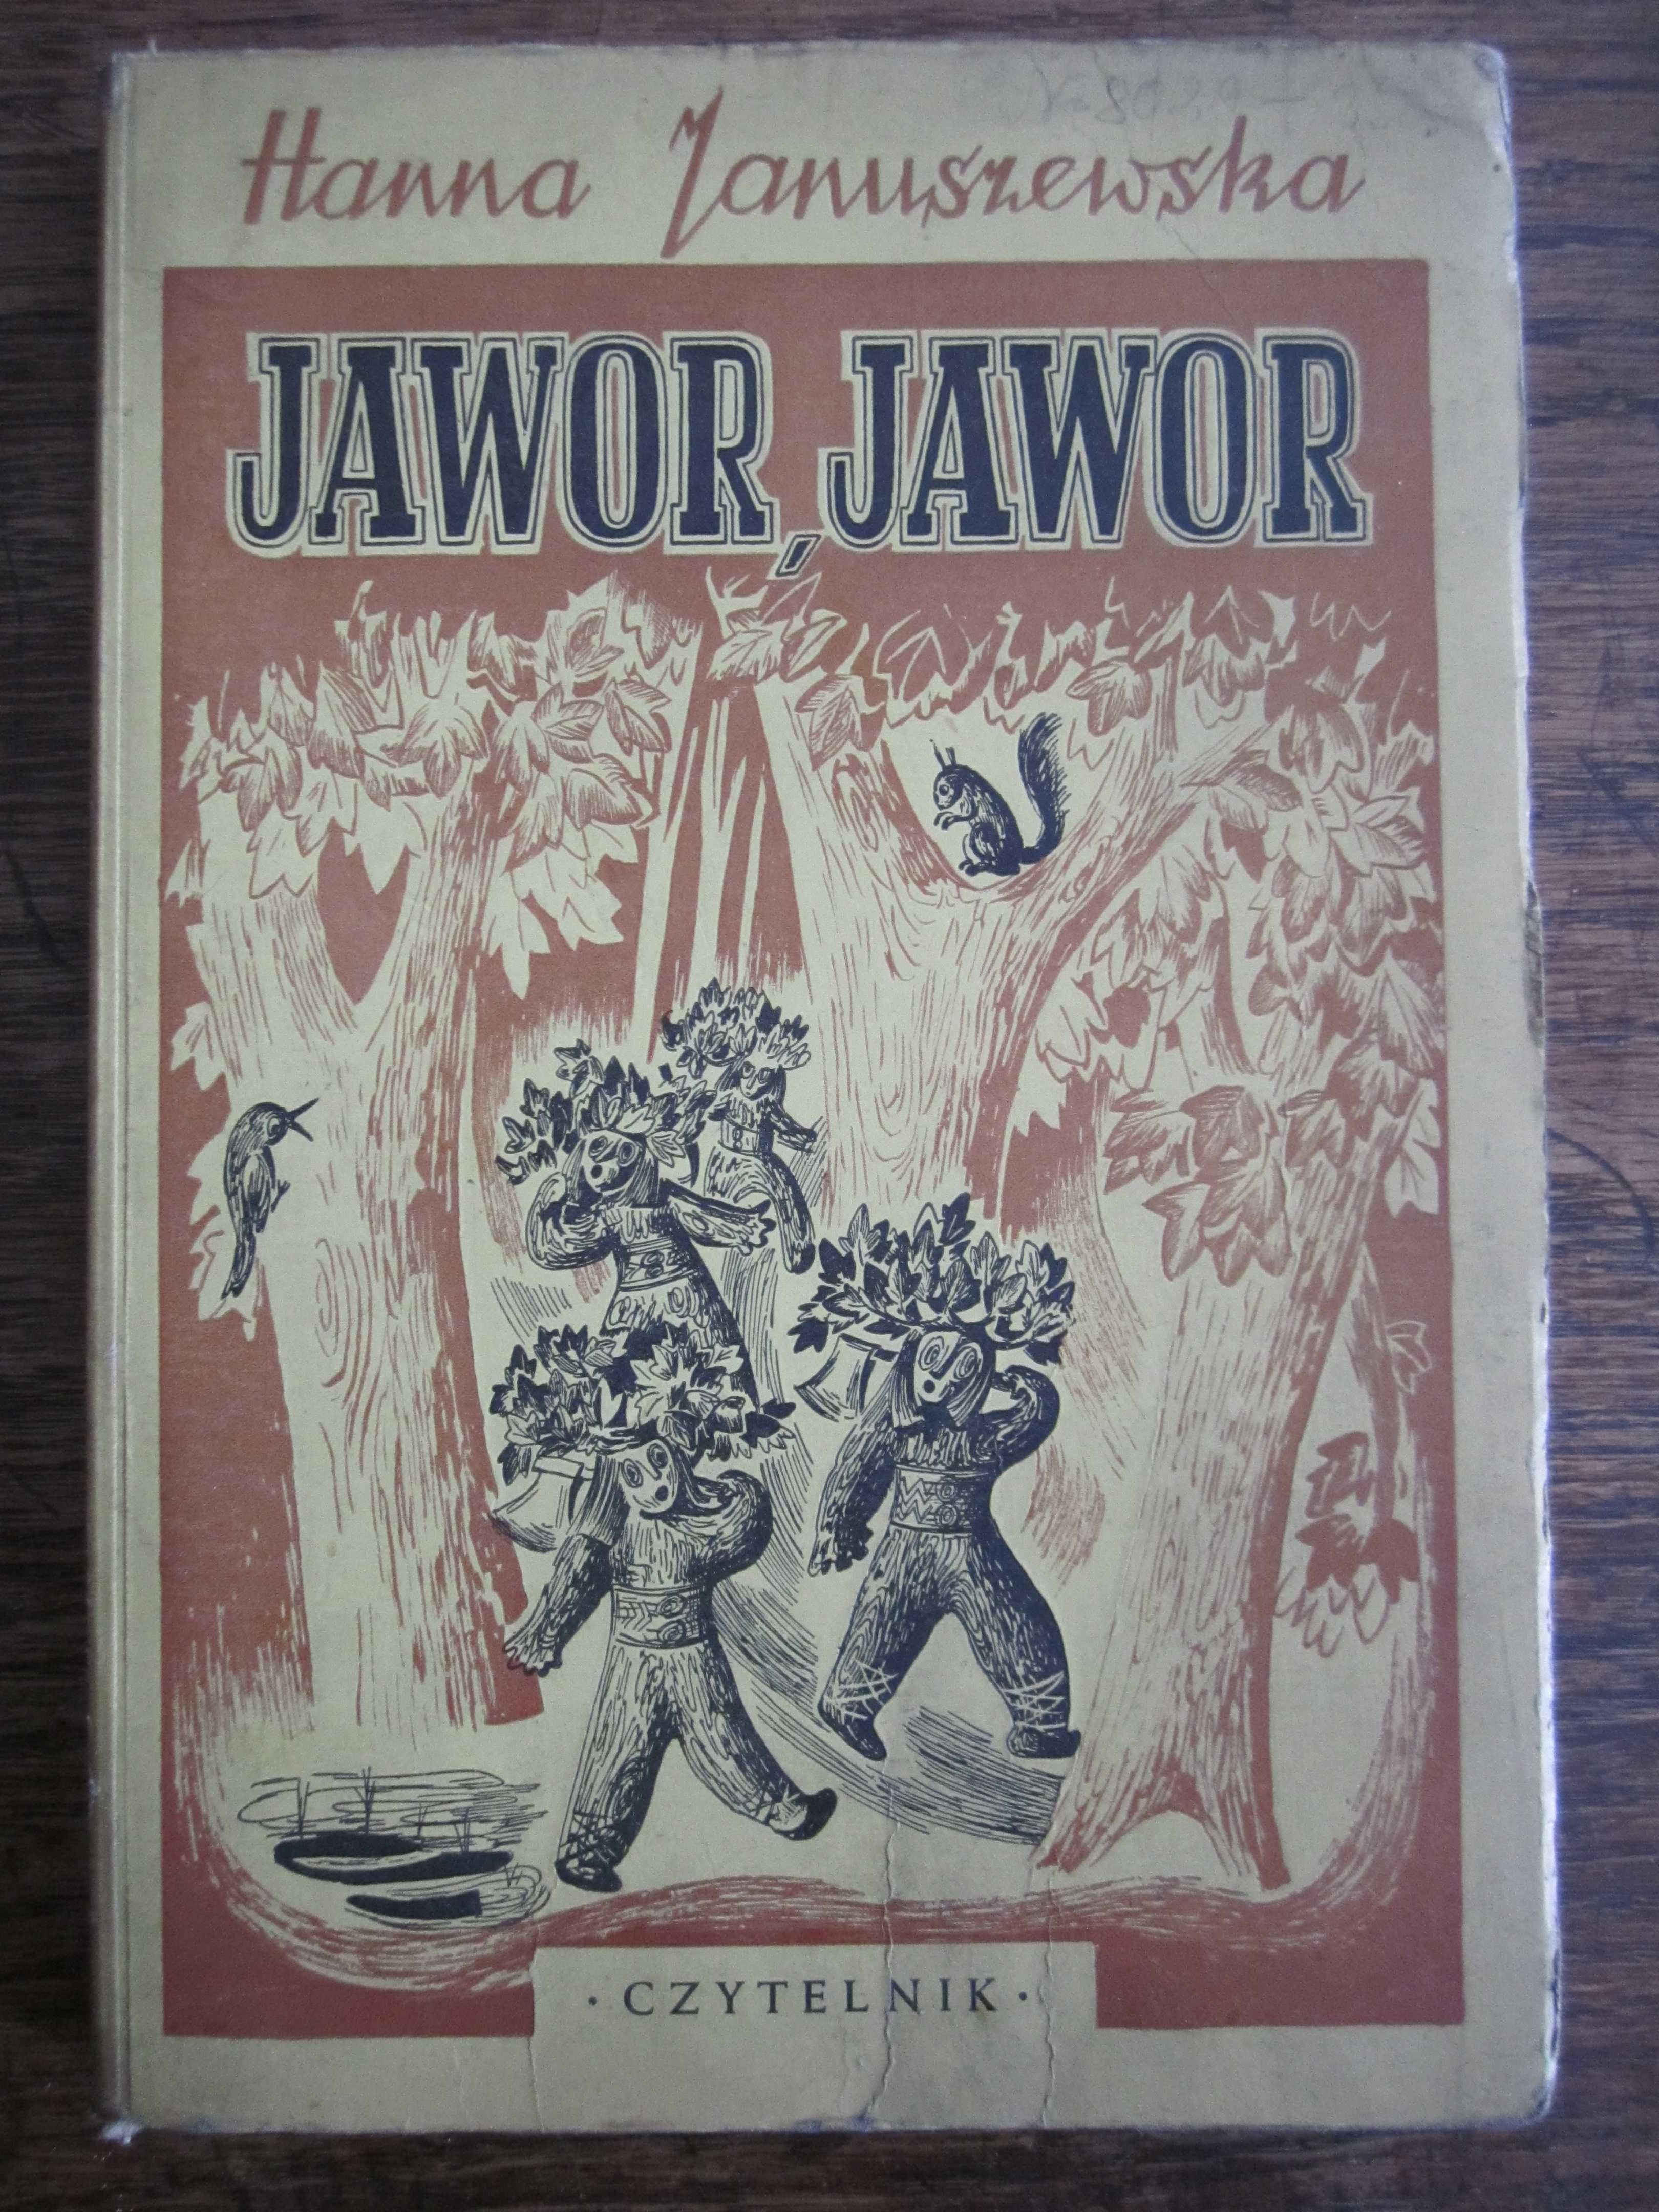 Książka "JAWOR, JAWOR" - Hanna Januszewska  - rok 1947